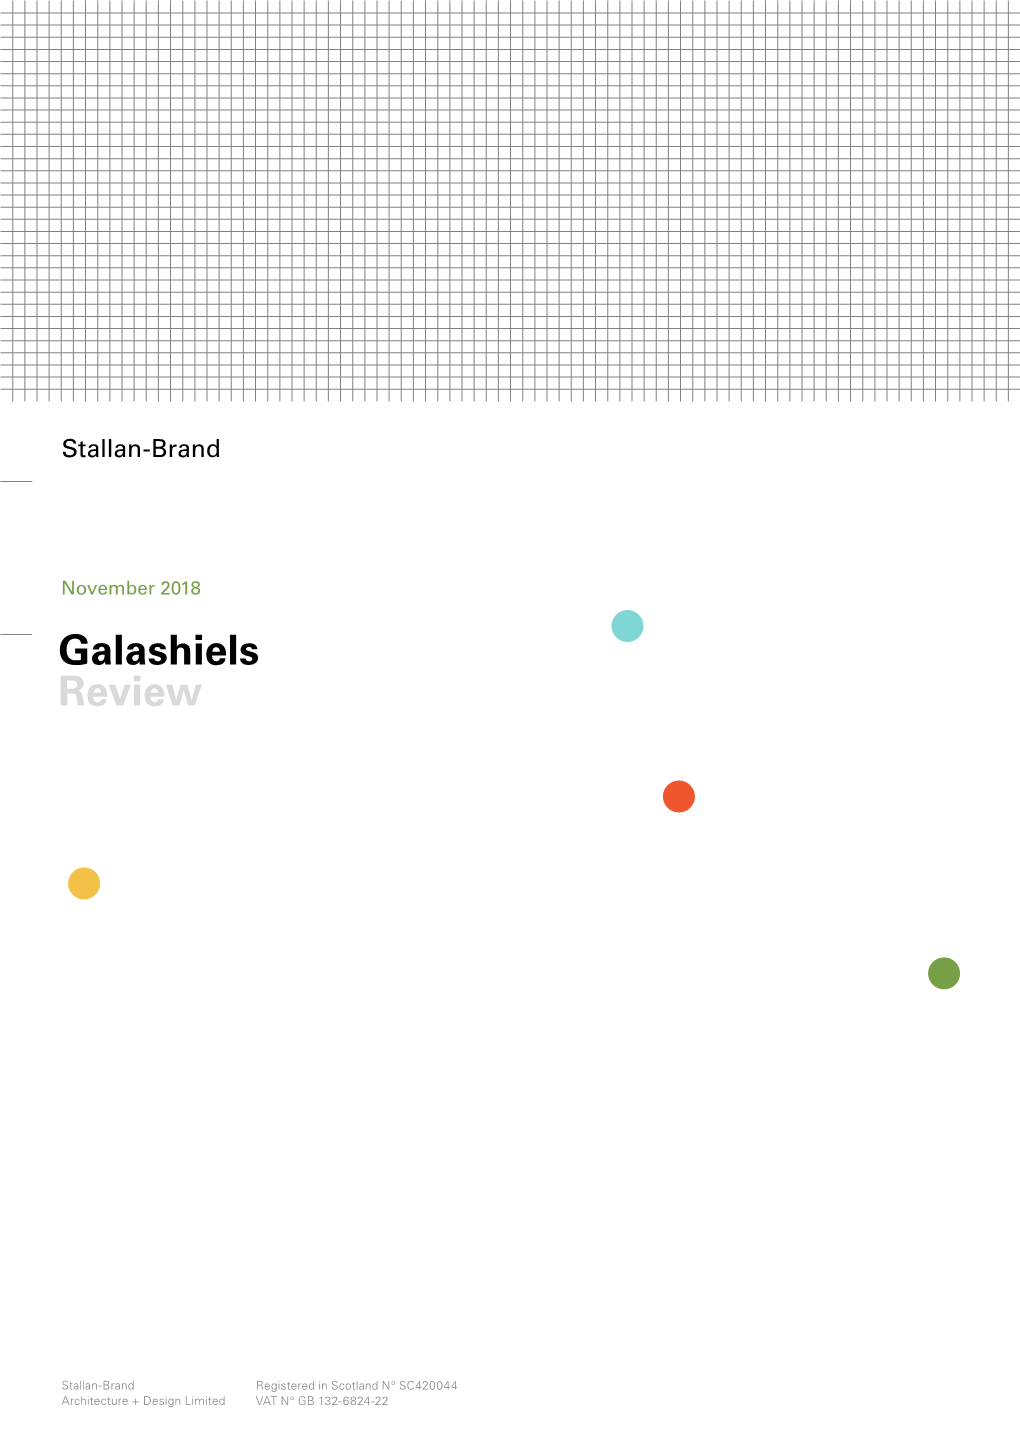 Galashiels Review